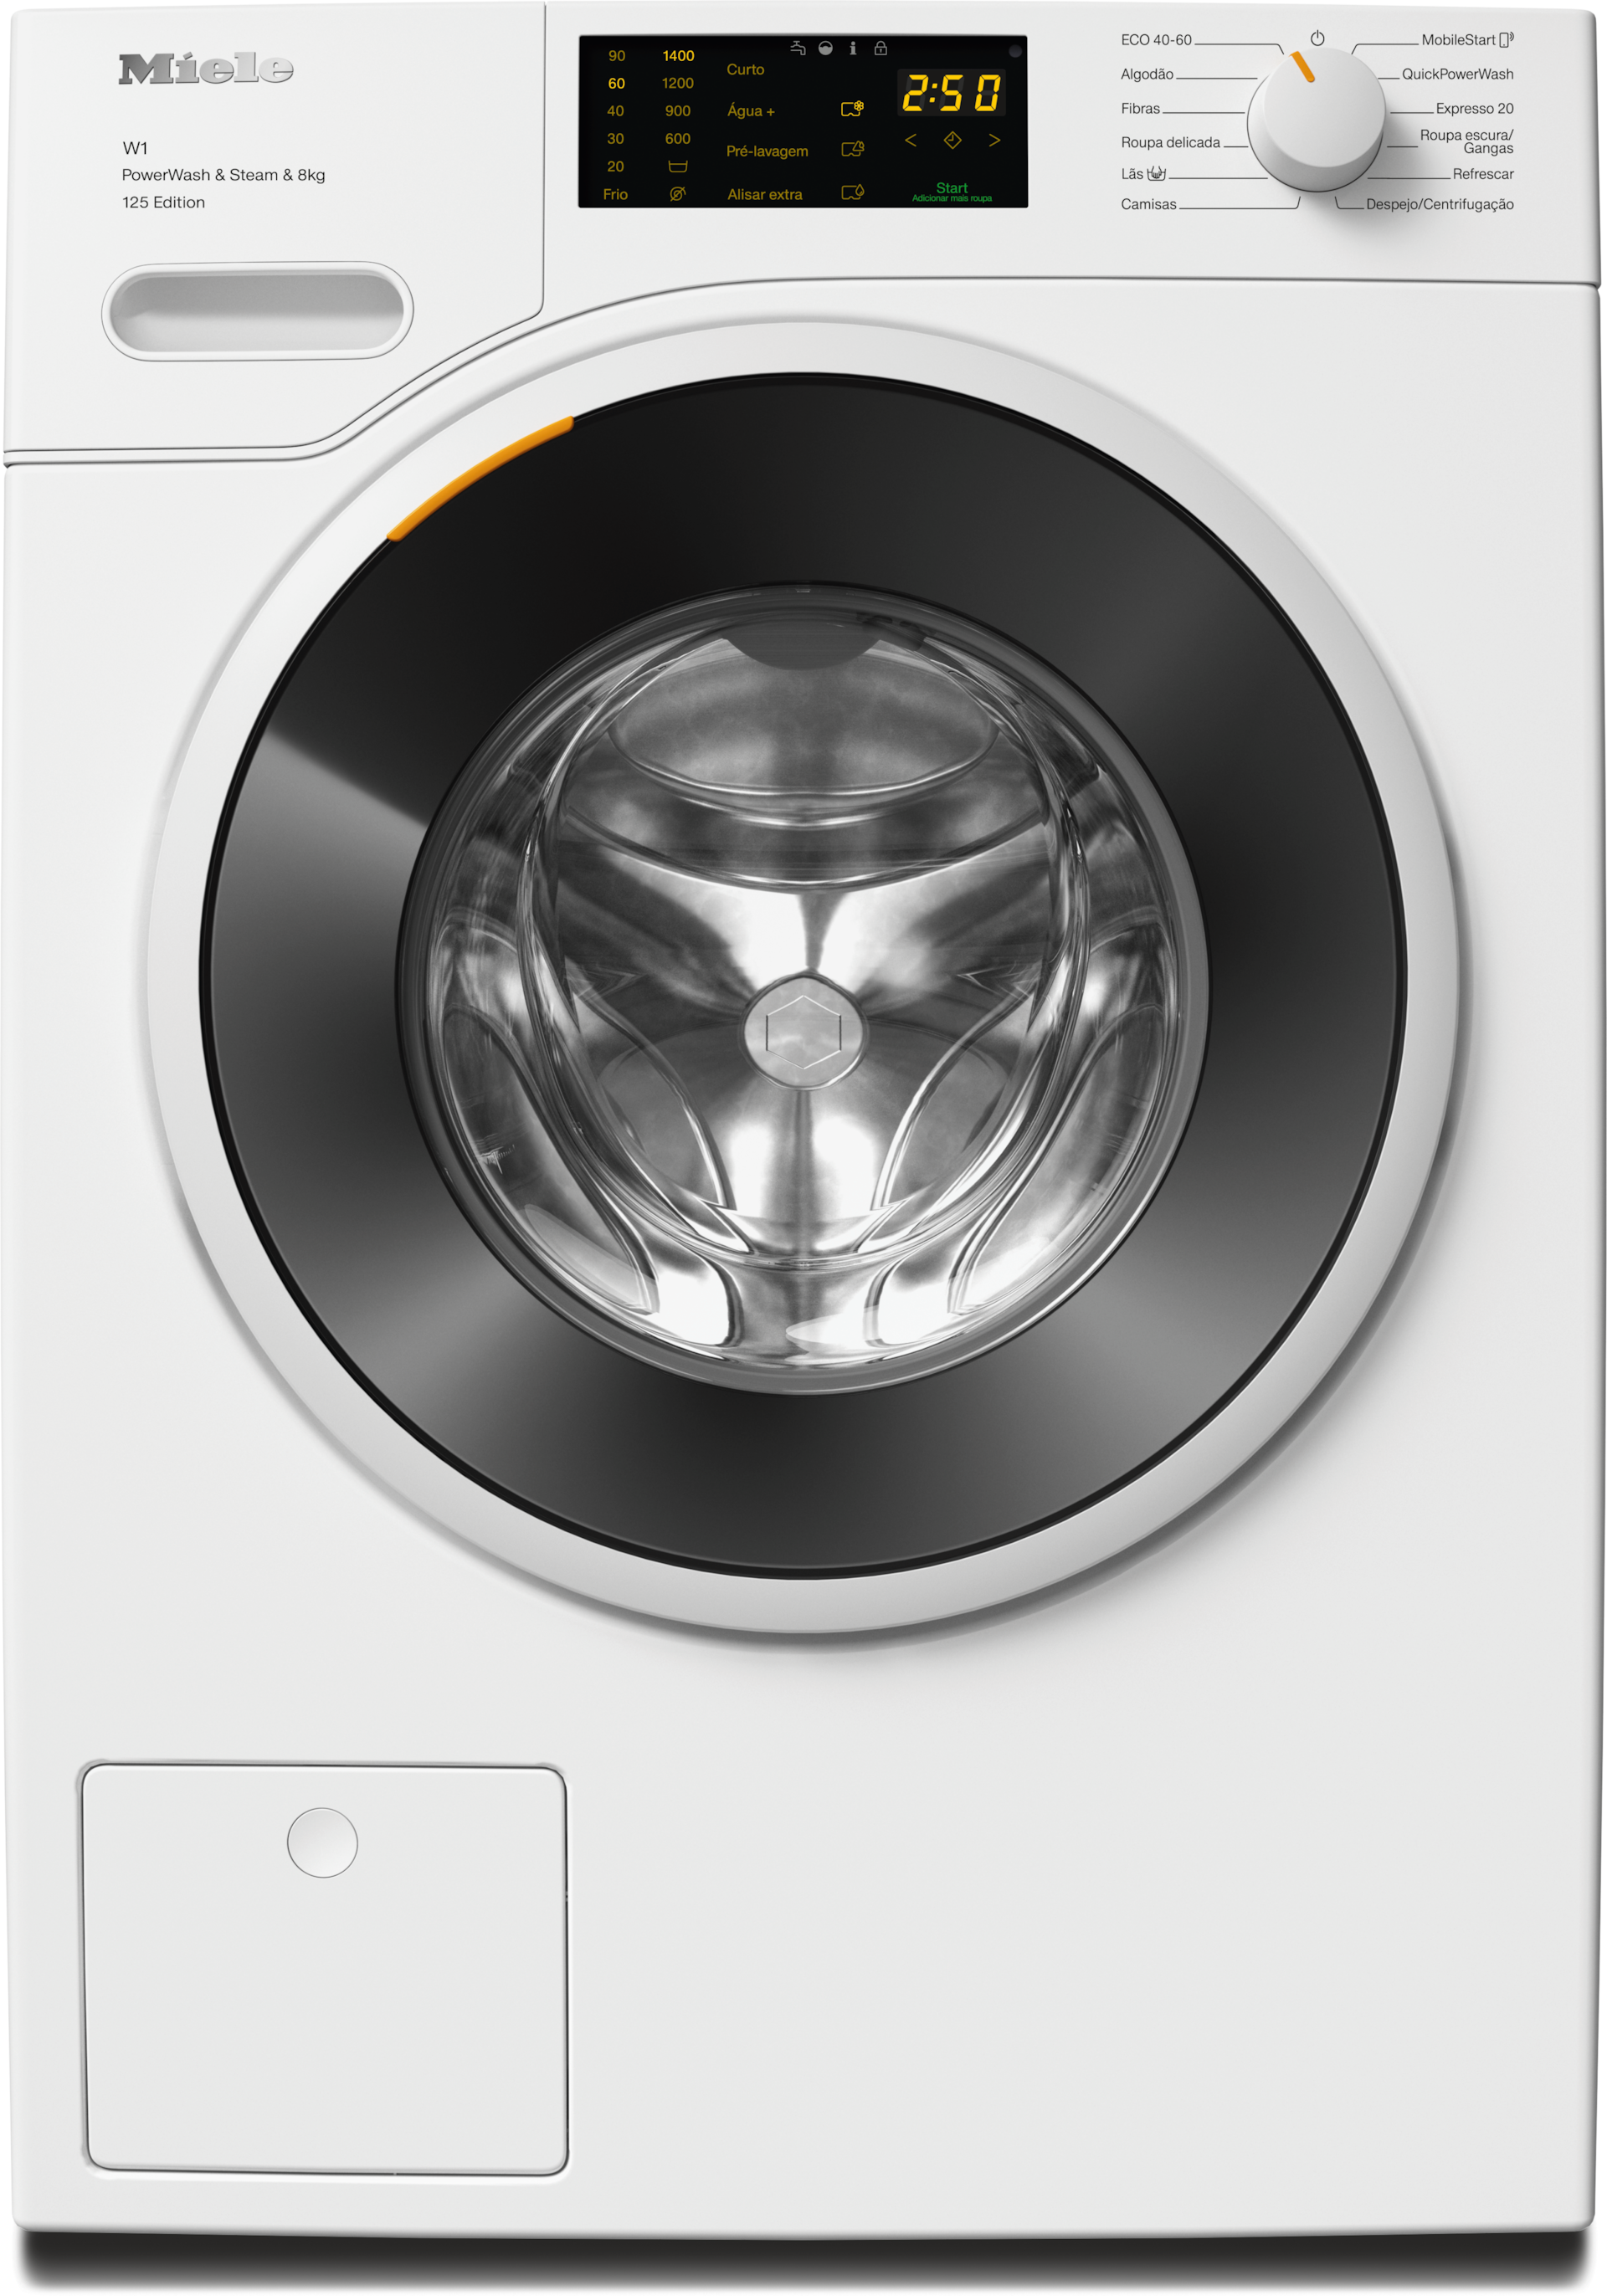 Máquinas de lavar roupa - WWB380 WCS 125 Edition Branco lótus - 1